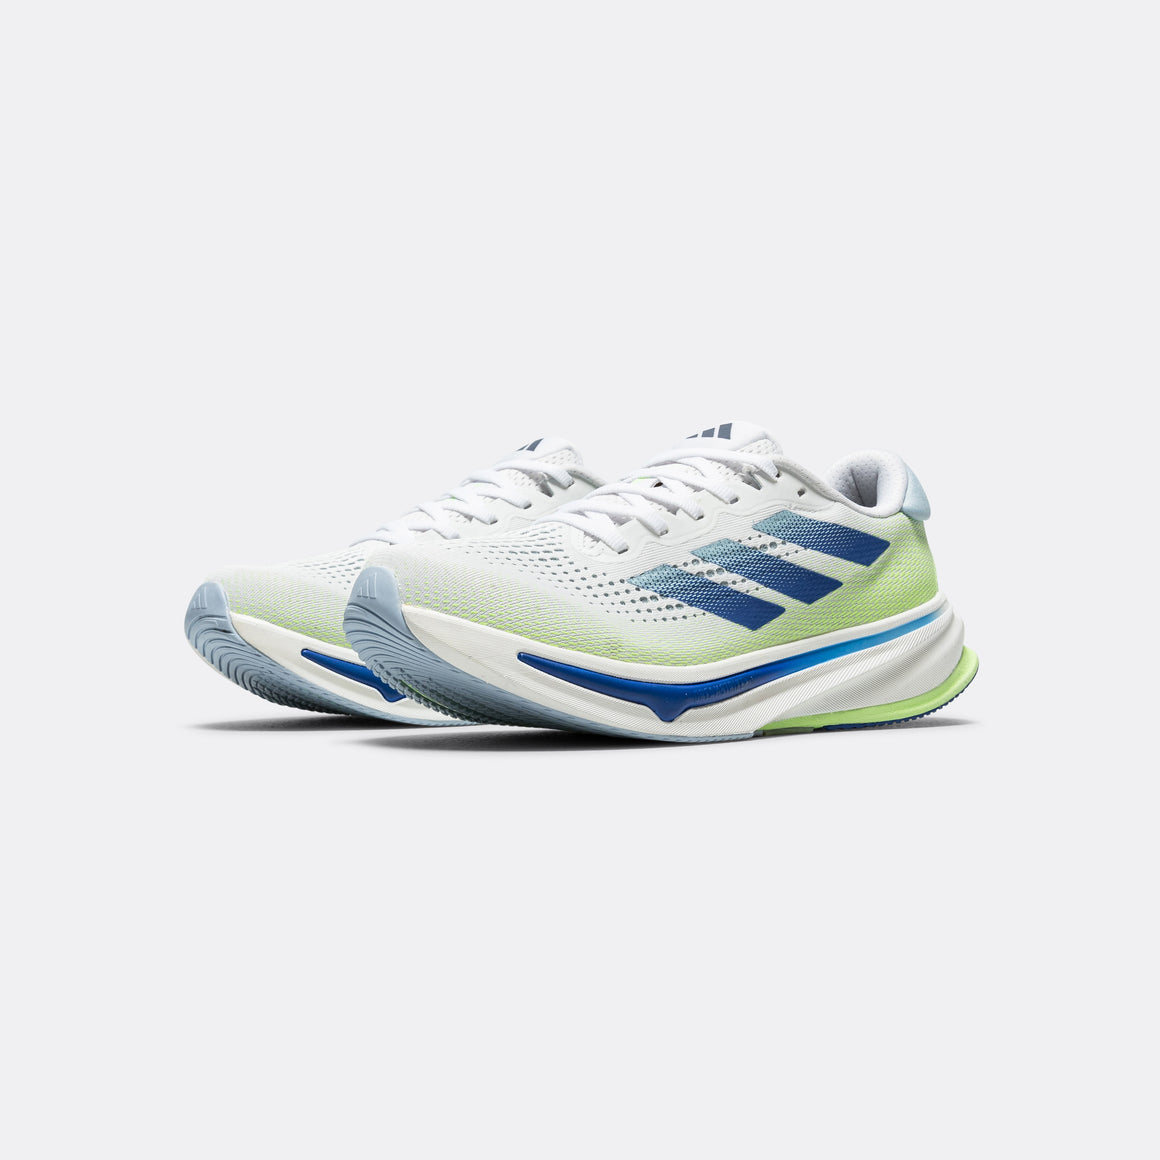 adidas - Mens Supernova Rise - Footwear White/Wonder Blue-Green Spark - Up There Athletics